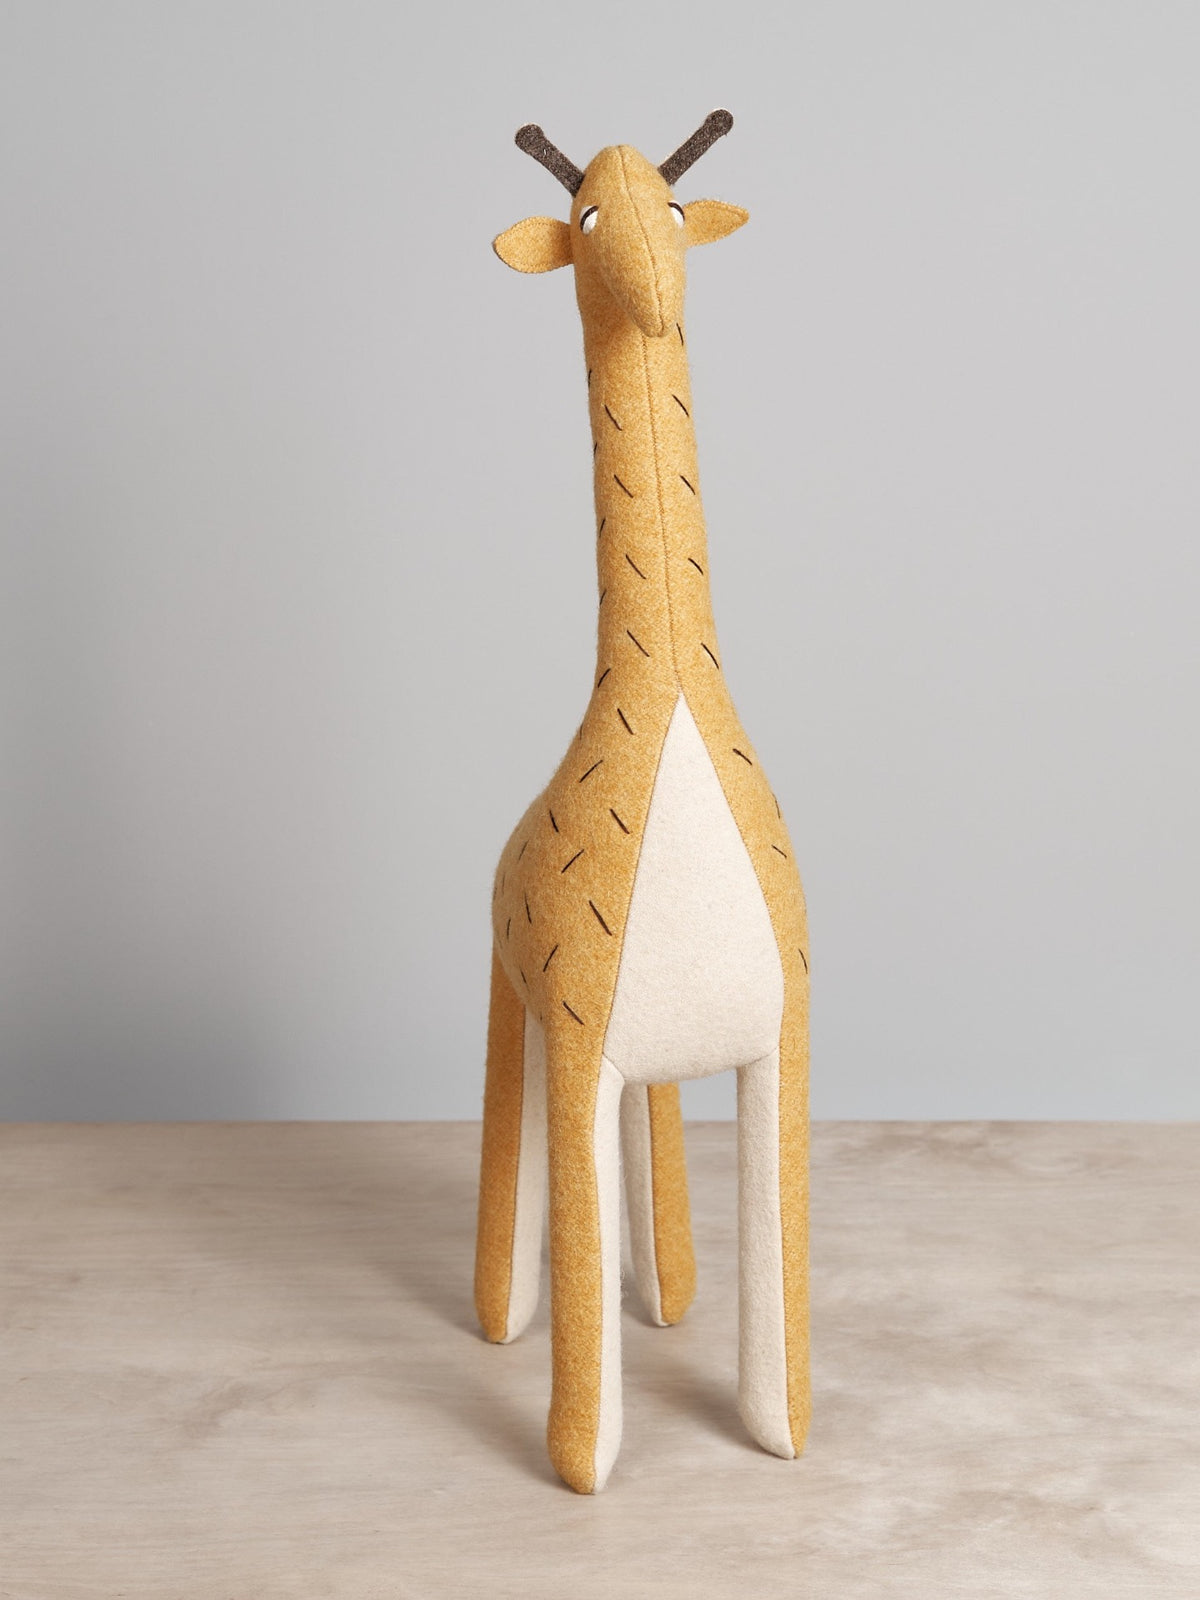 A Carapau ZIFFA, the Nubian giraffe, standing on a wooden table.